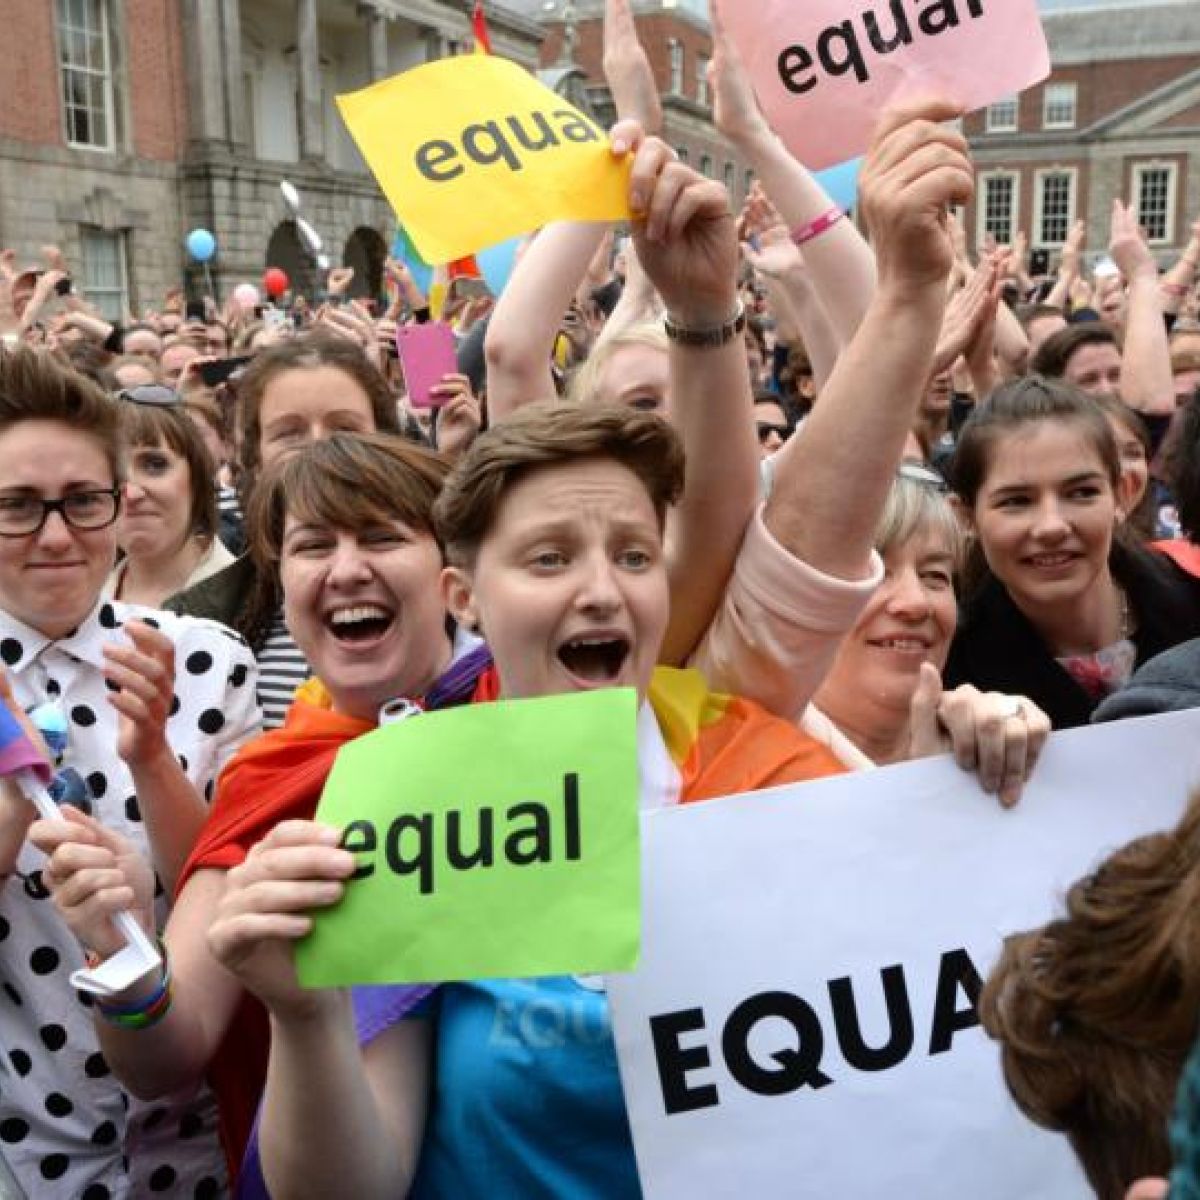 Dublin LGBTQ Pride Guide 2019 by Dublin Pride - issuu